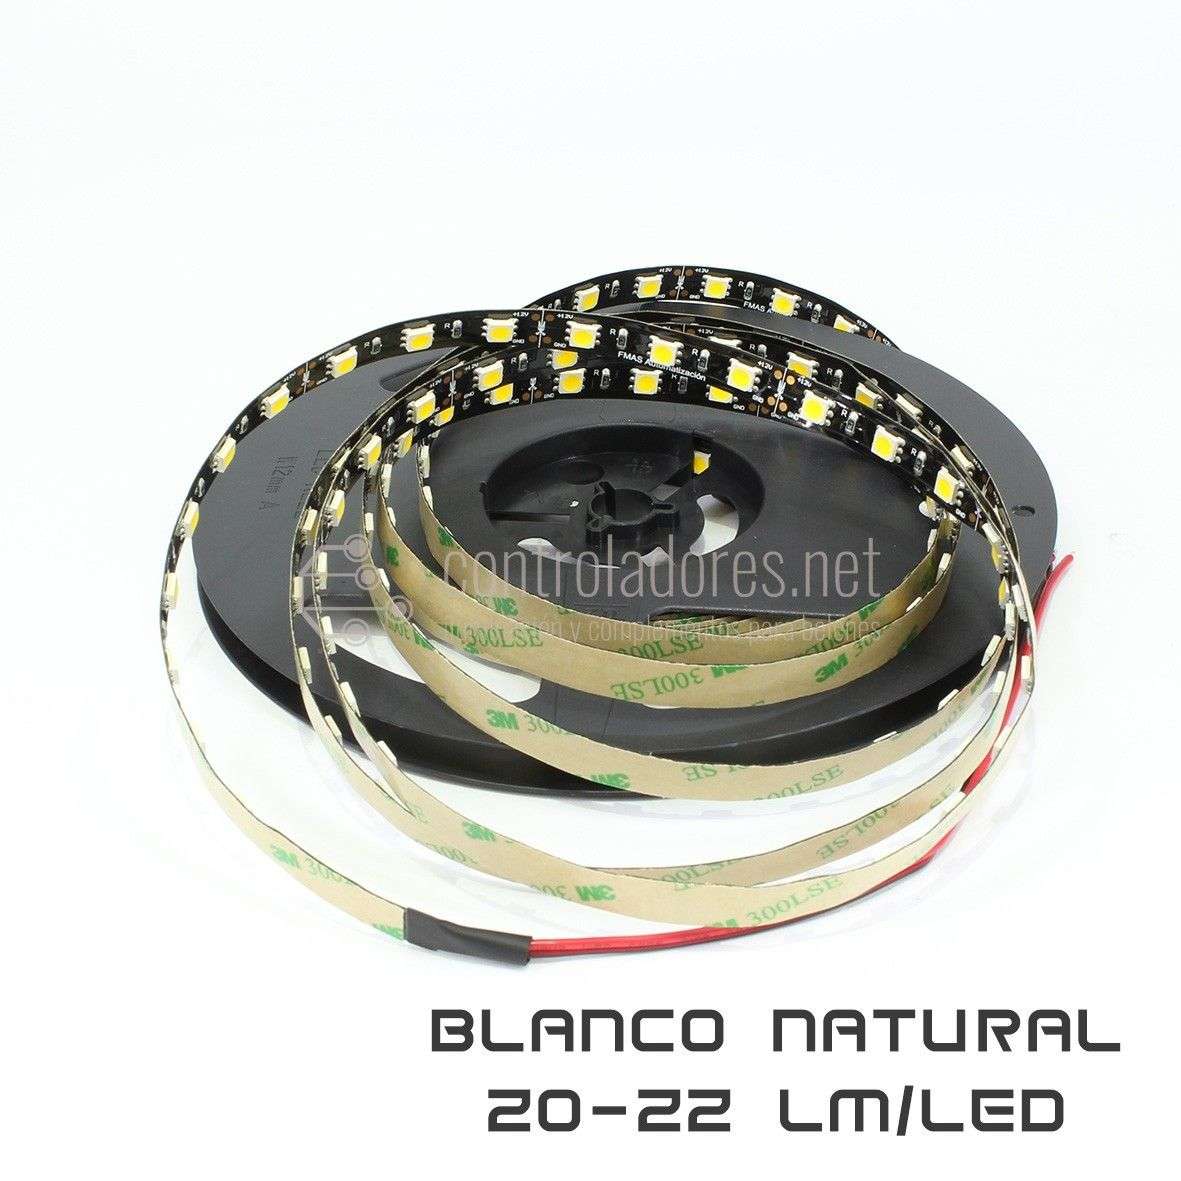 Tira LED Profesional BLANCO NATURAL máxima luminosidad 20-22lm/LED